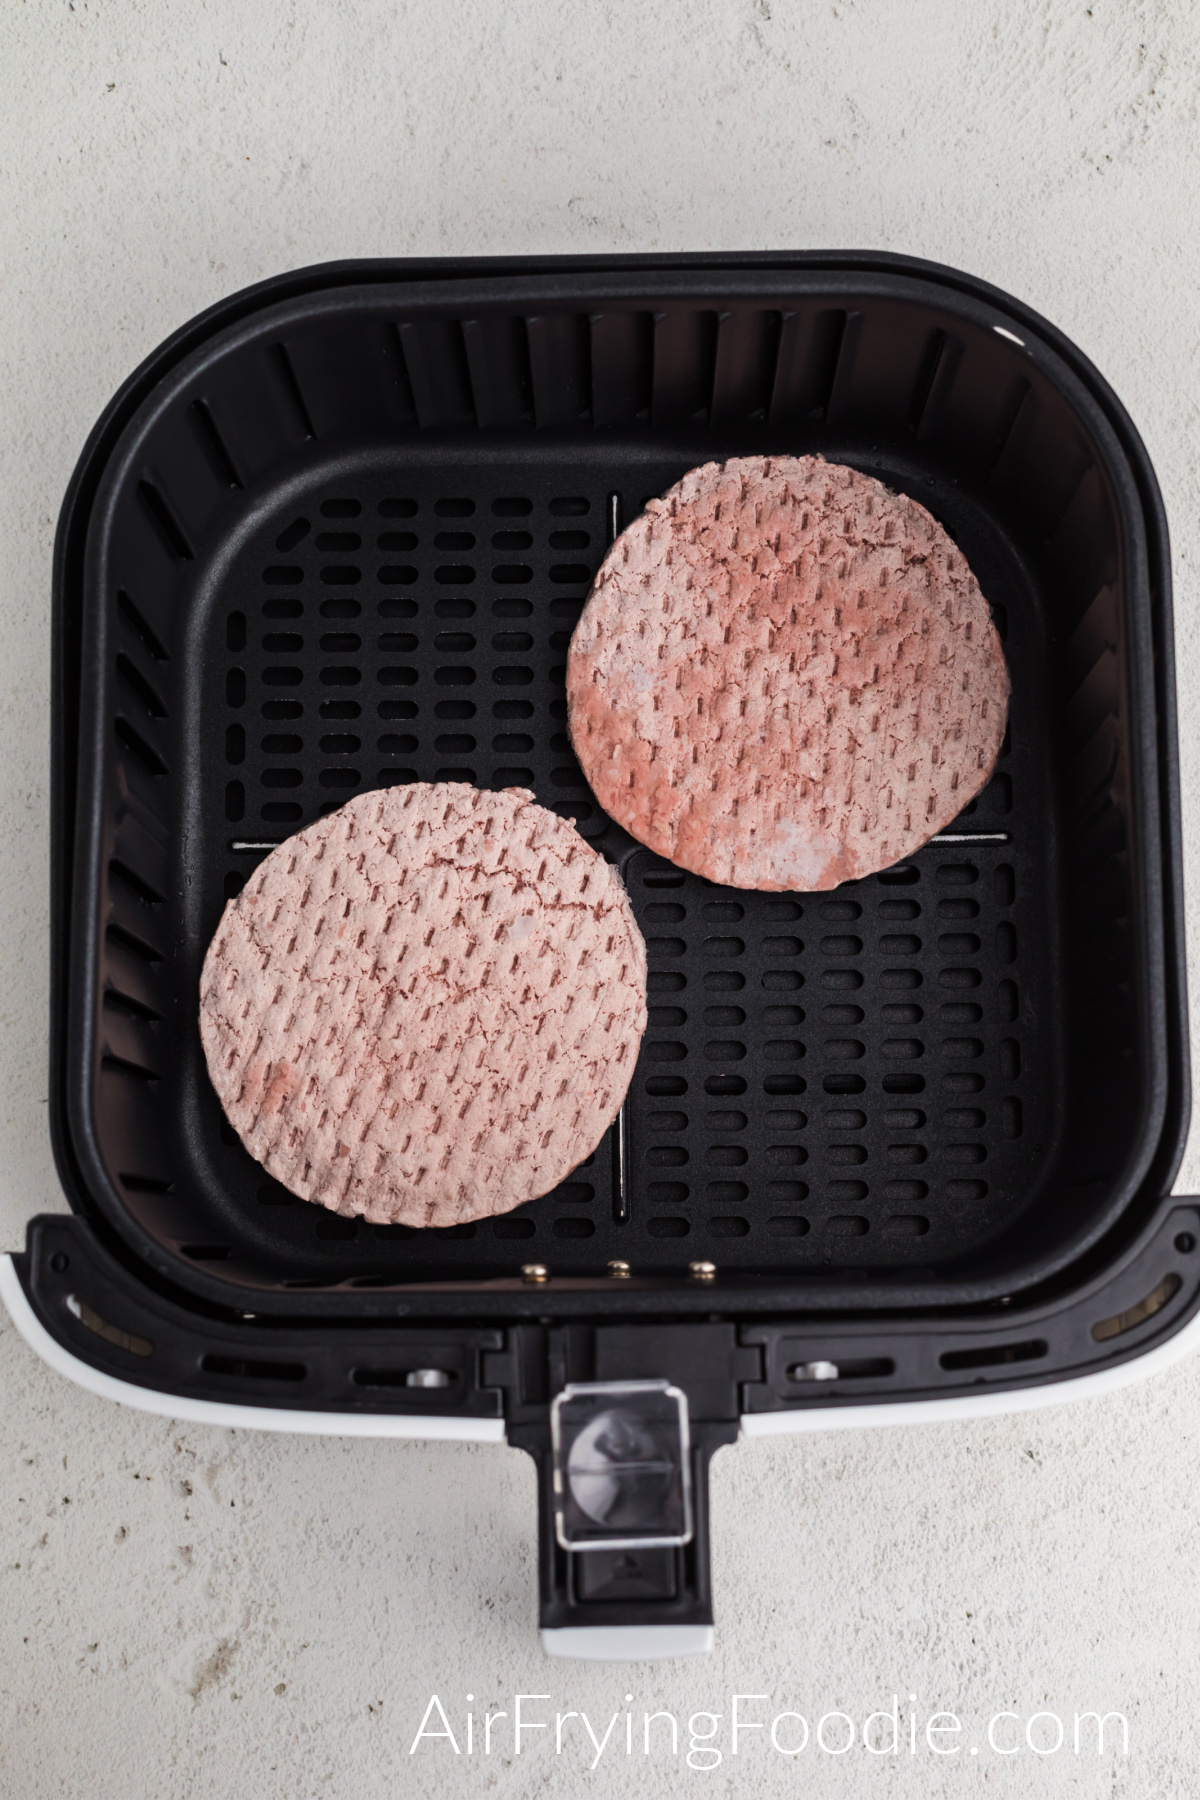 Frozen burger patties in the basket of the air fryer.